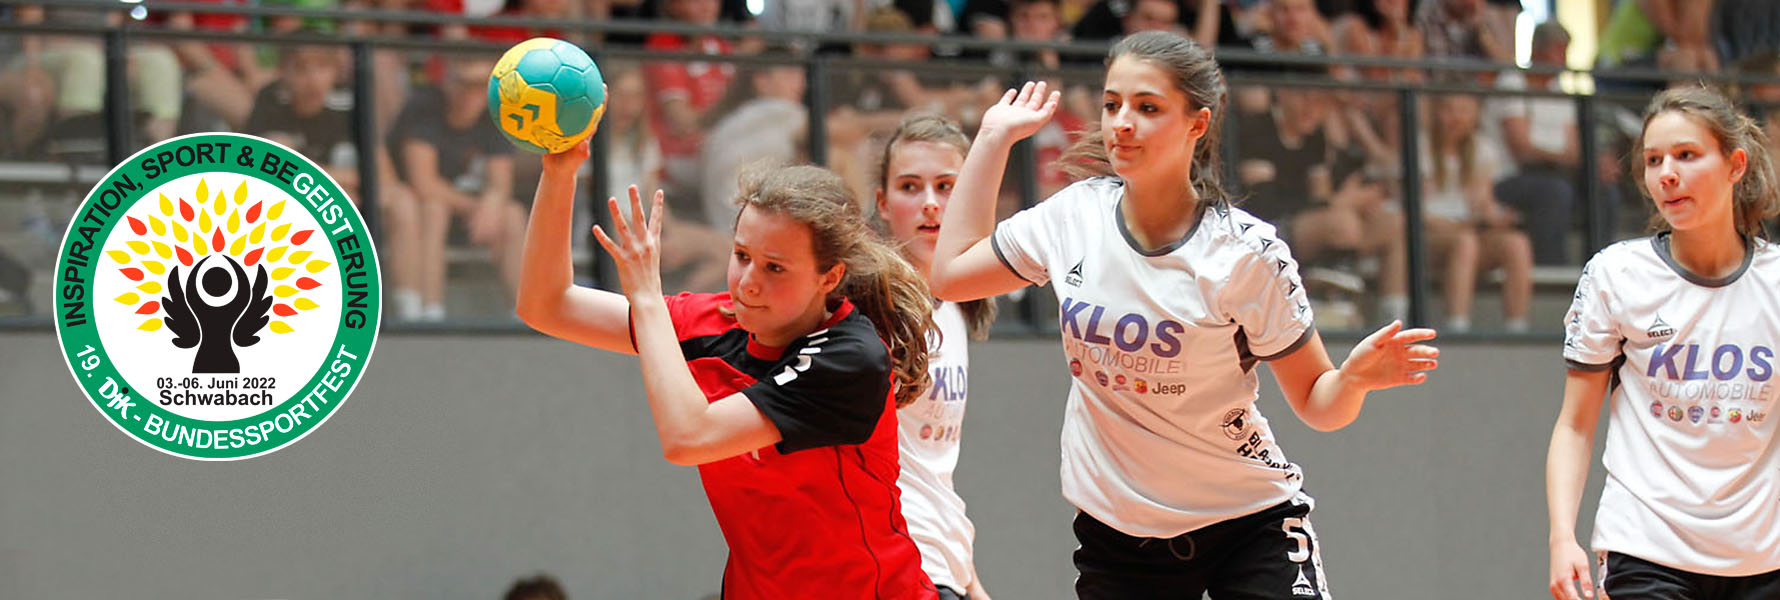 Bild Bundessportfest 2022 Handball